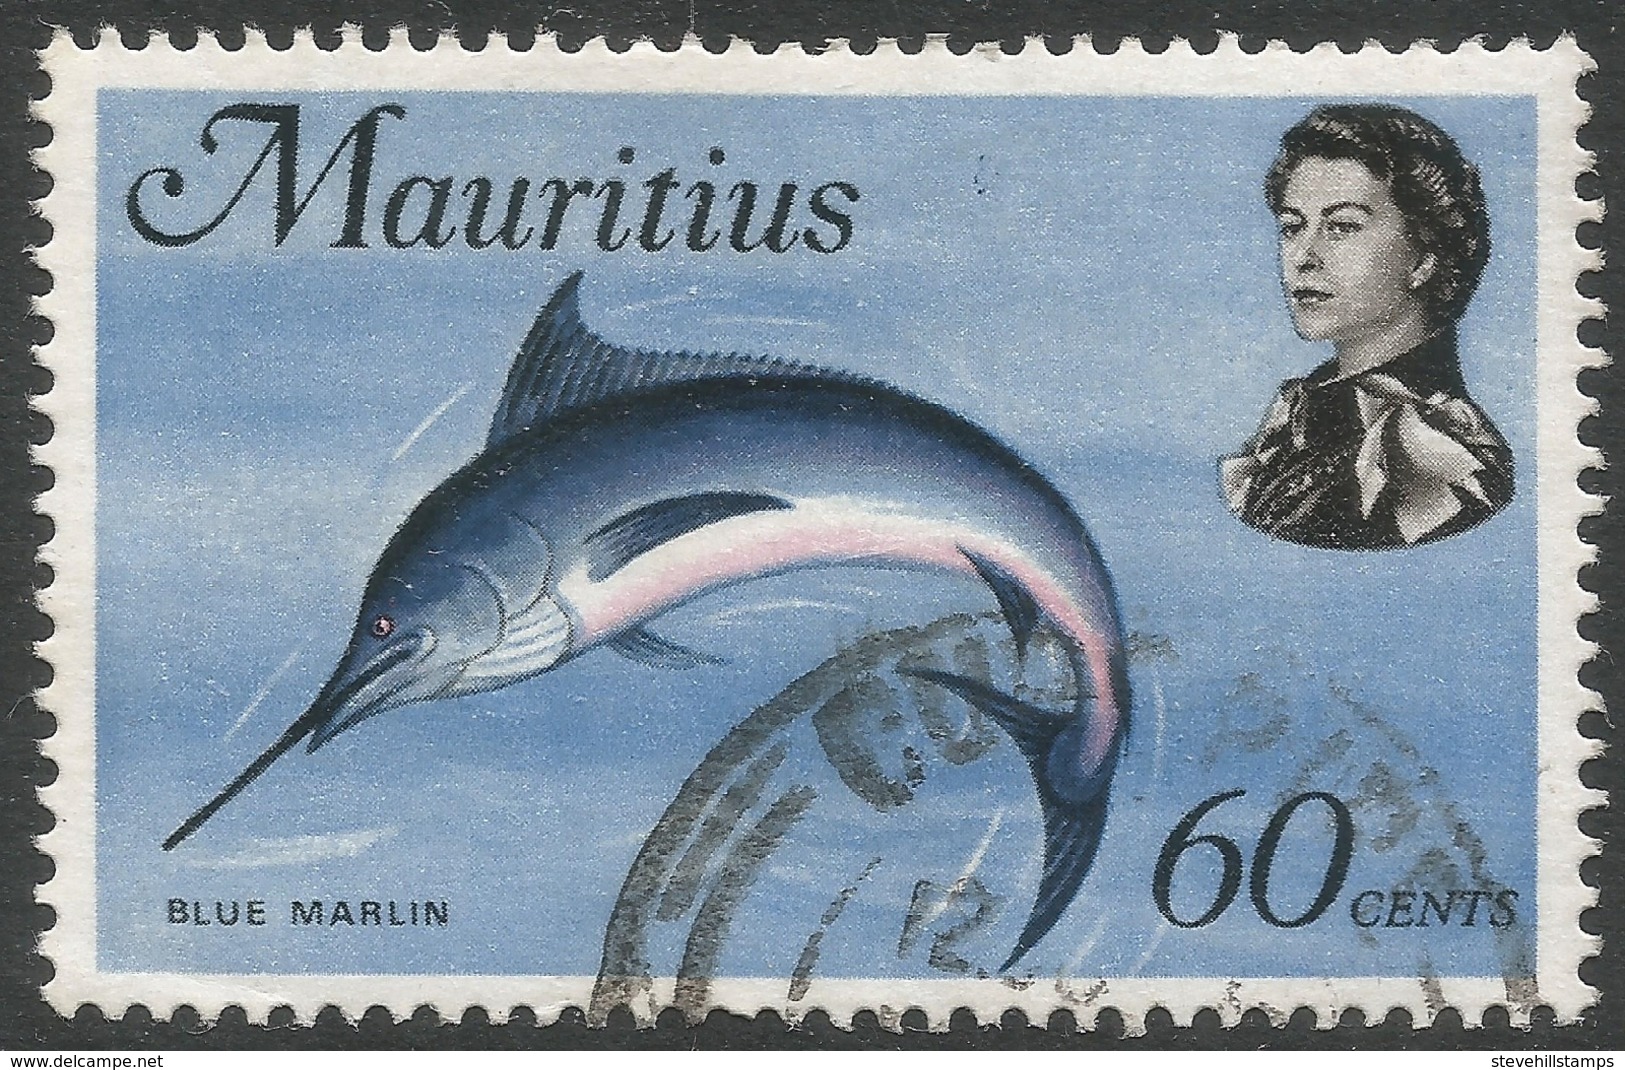 Mauritius. 1969 Sealife. 60c Used. SG 449b - Mauritius (1968-...)